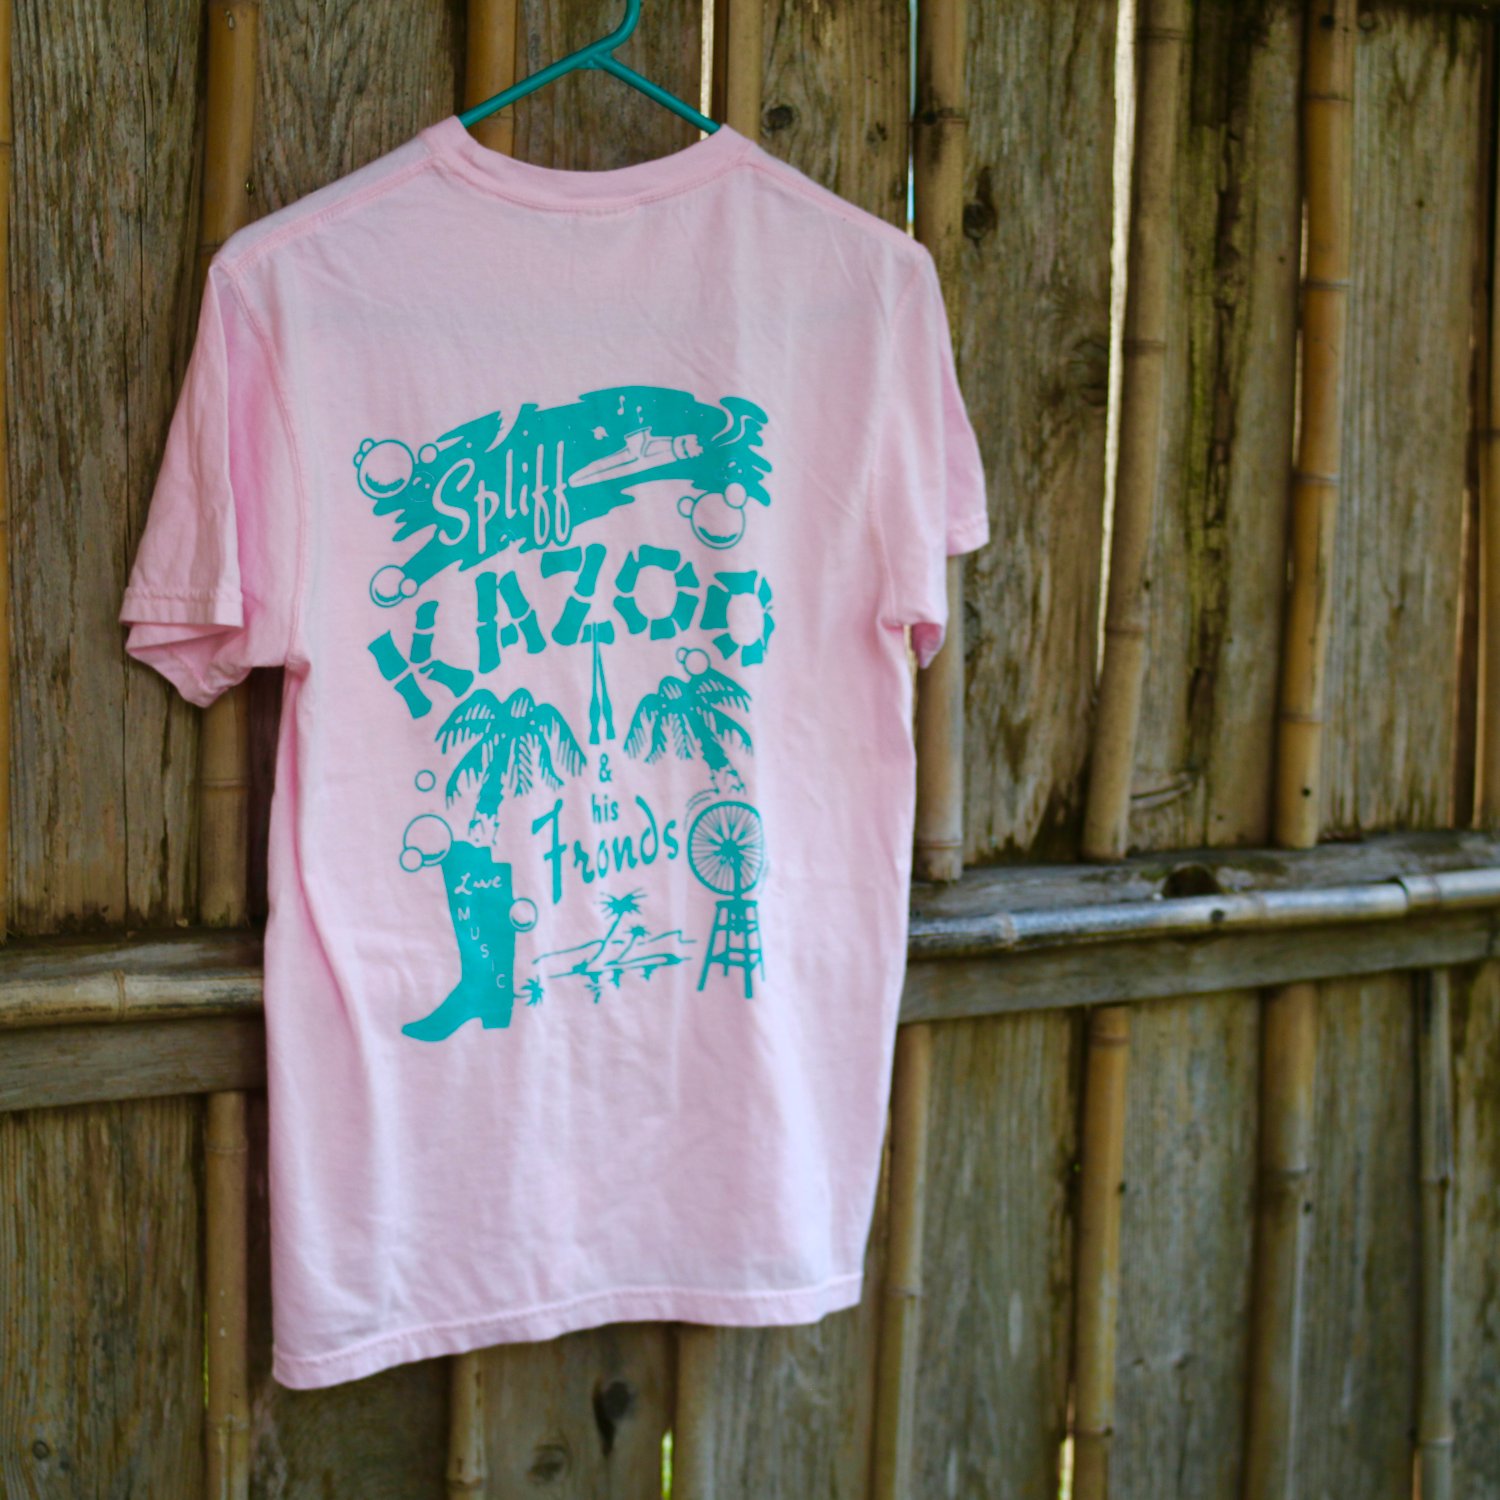 Image of Beautiful Pink/Teal Pocket Tee Shirt